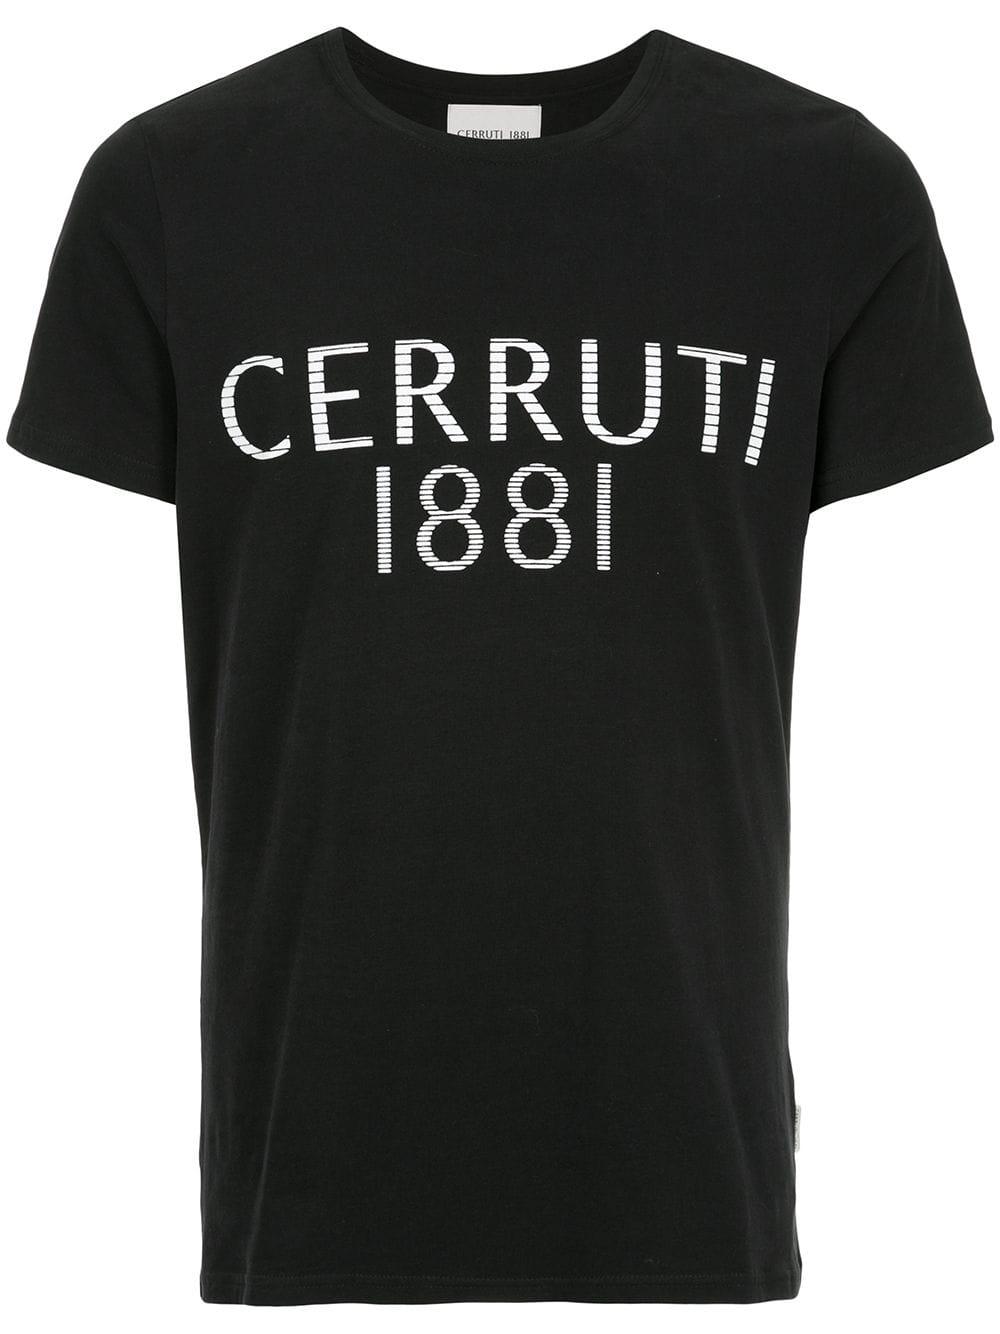 Cerruti 1881 Cotton Logo Print T-shirt in Black for Men - Lyst